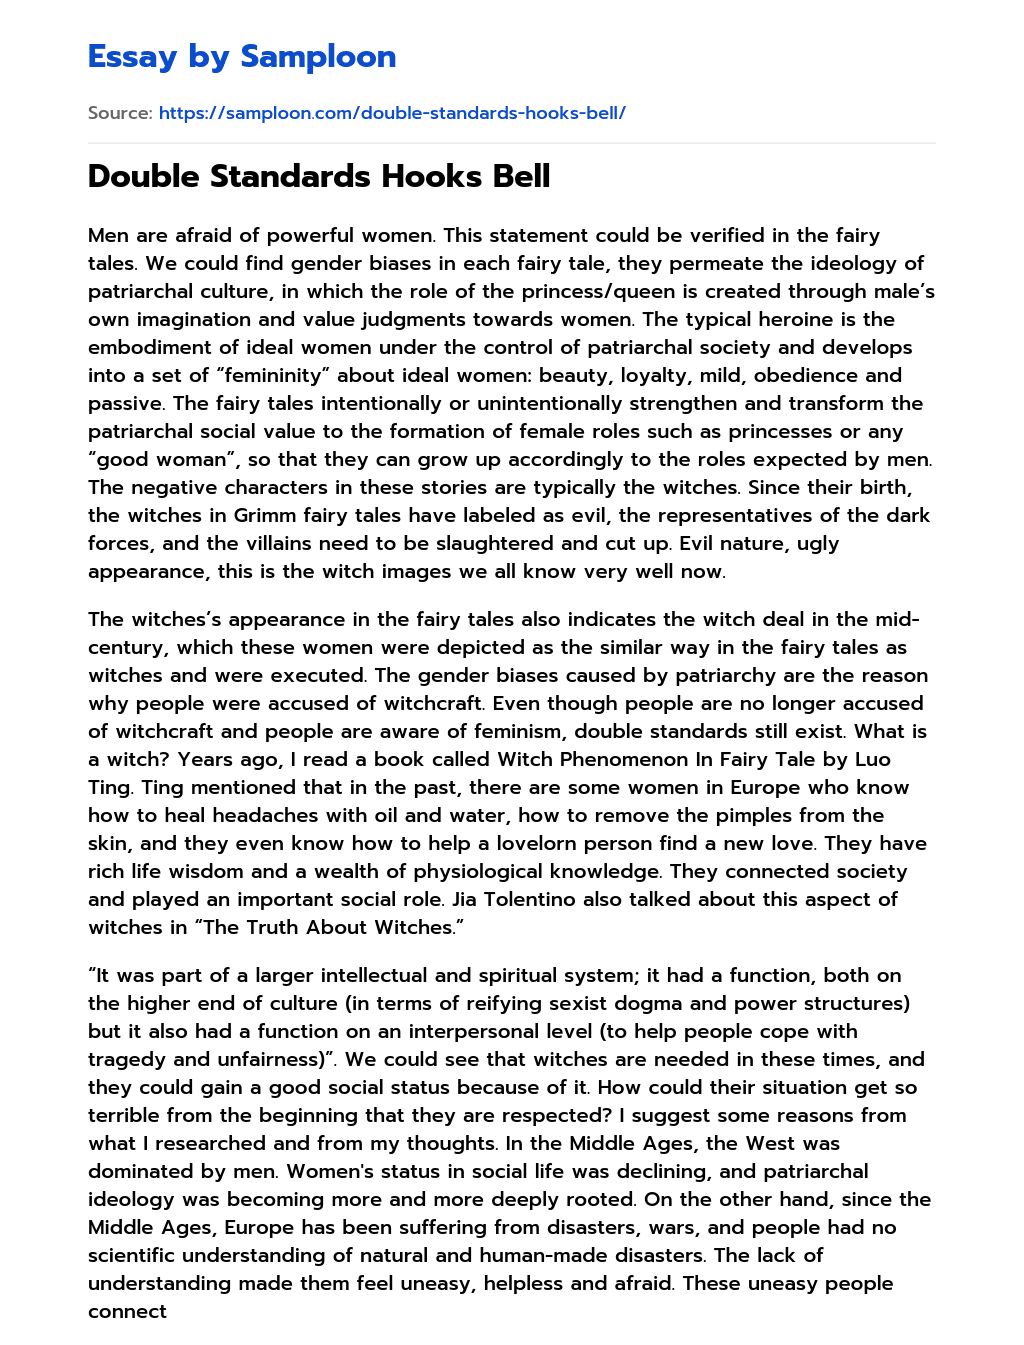 Double Standards Hooks Bell essay